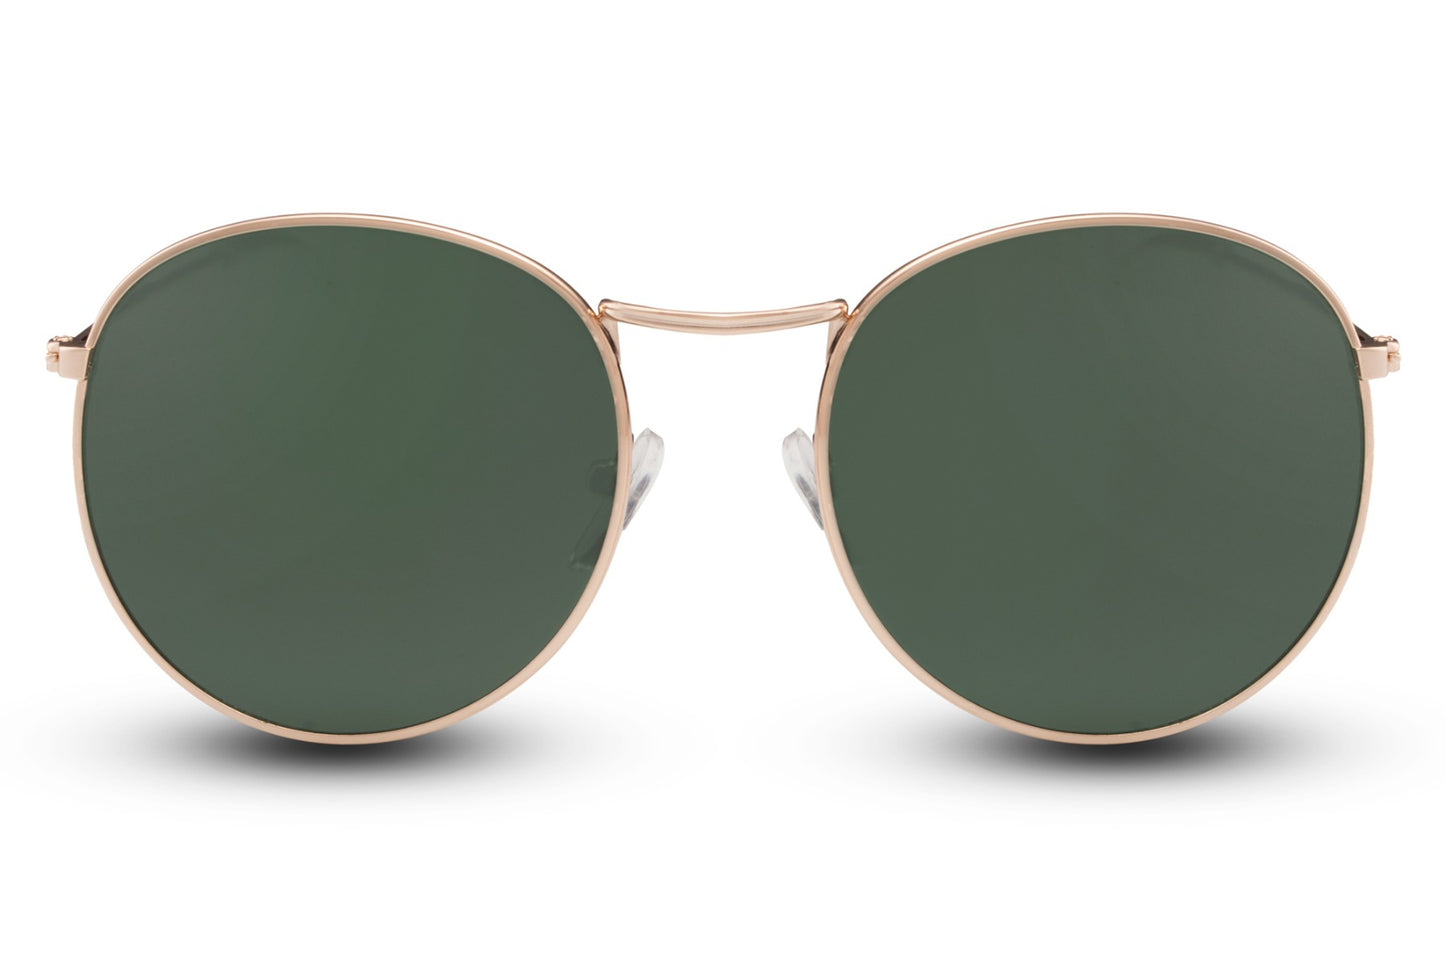 Eco Green Round Sunglasses - Iconic Sunglasses NDL1408